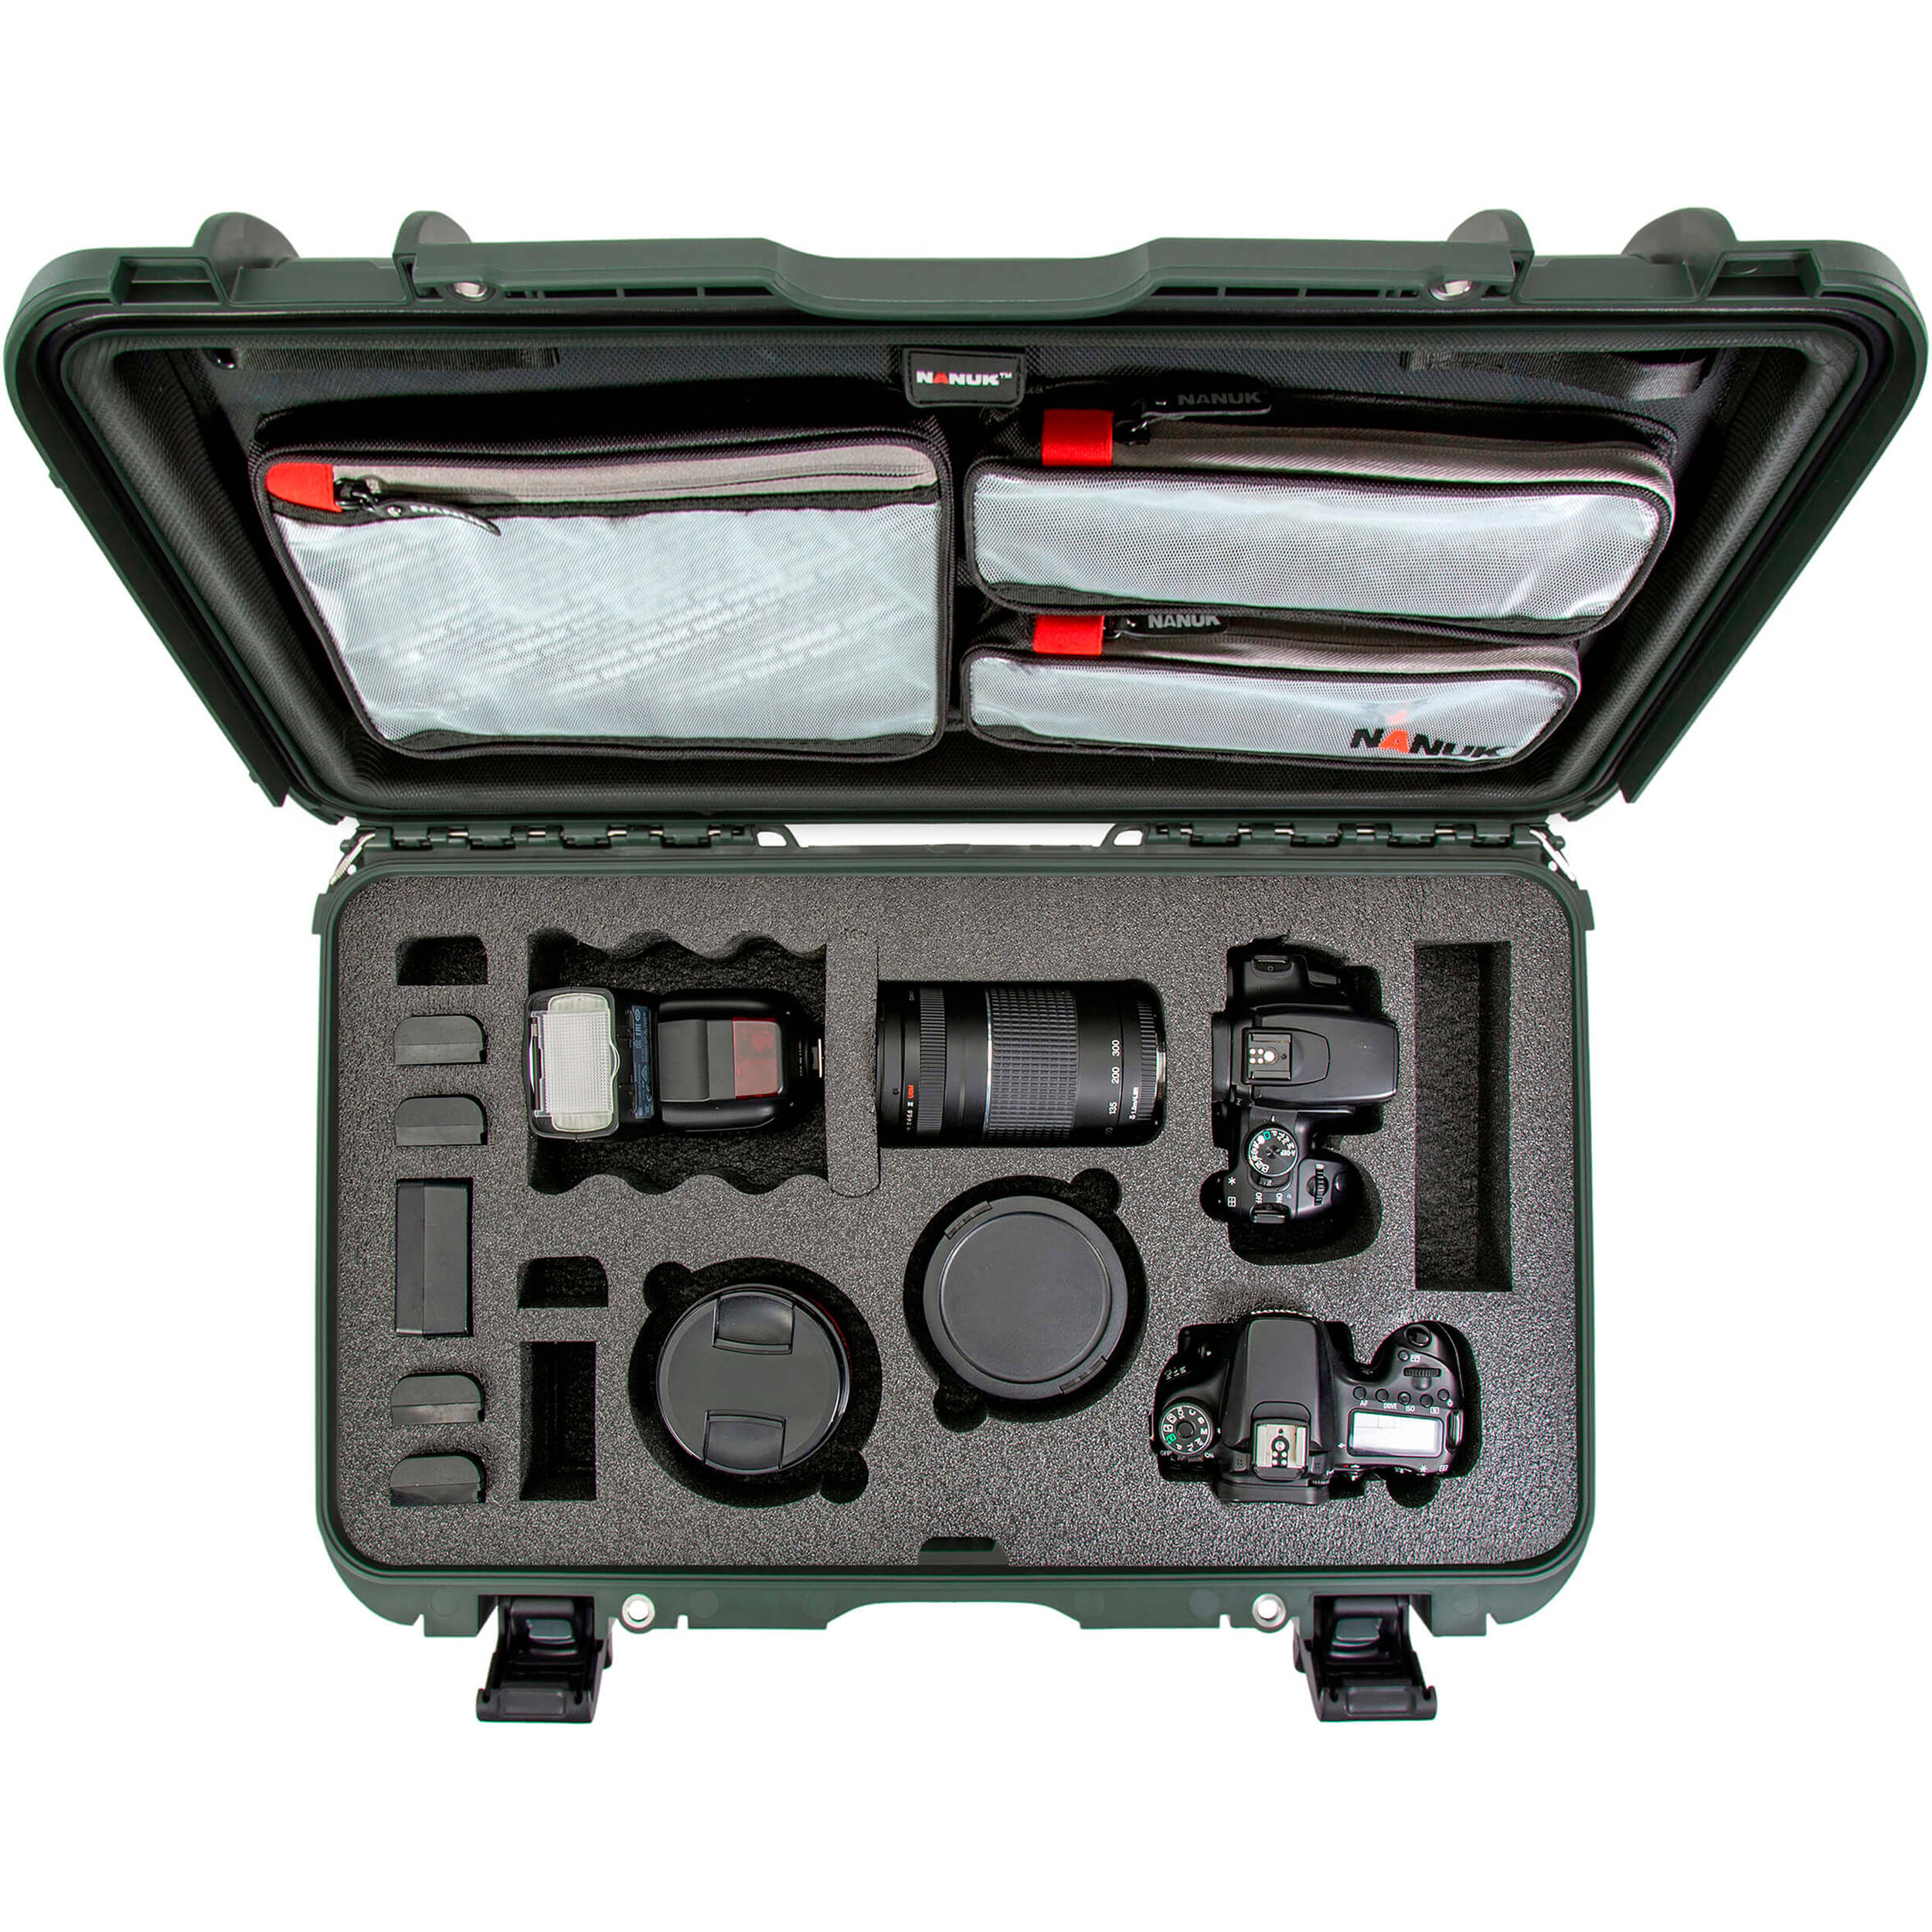 Nanuk 935 DSLR Camera Case with Lid Organizer (Olive)